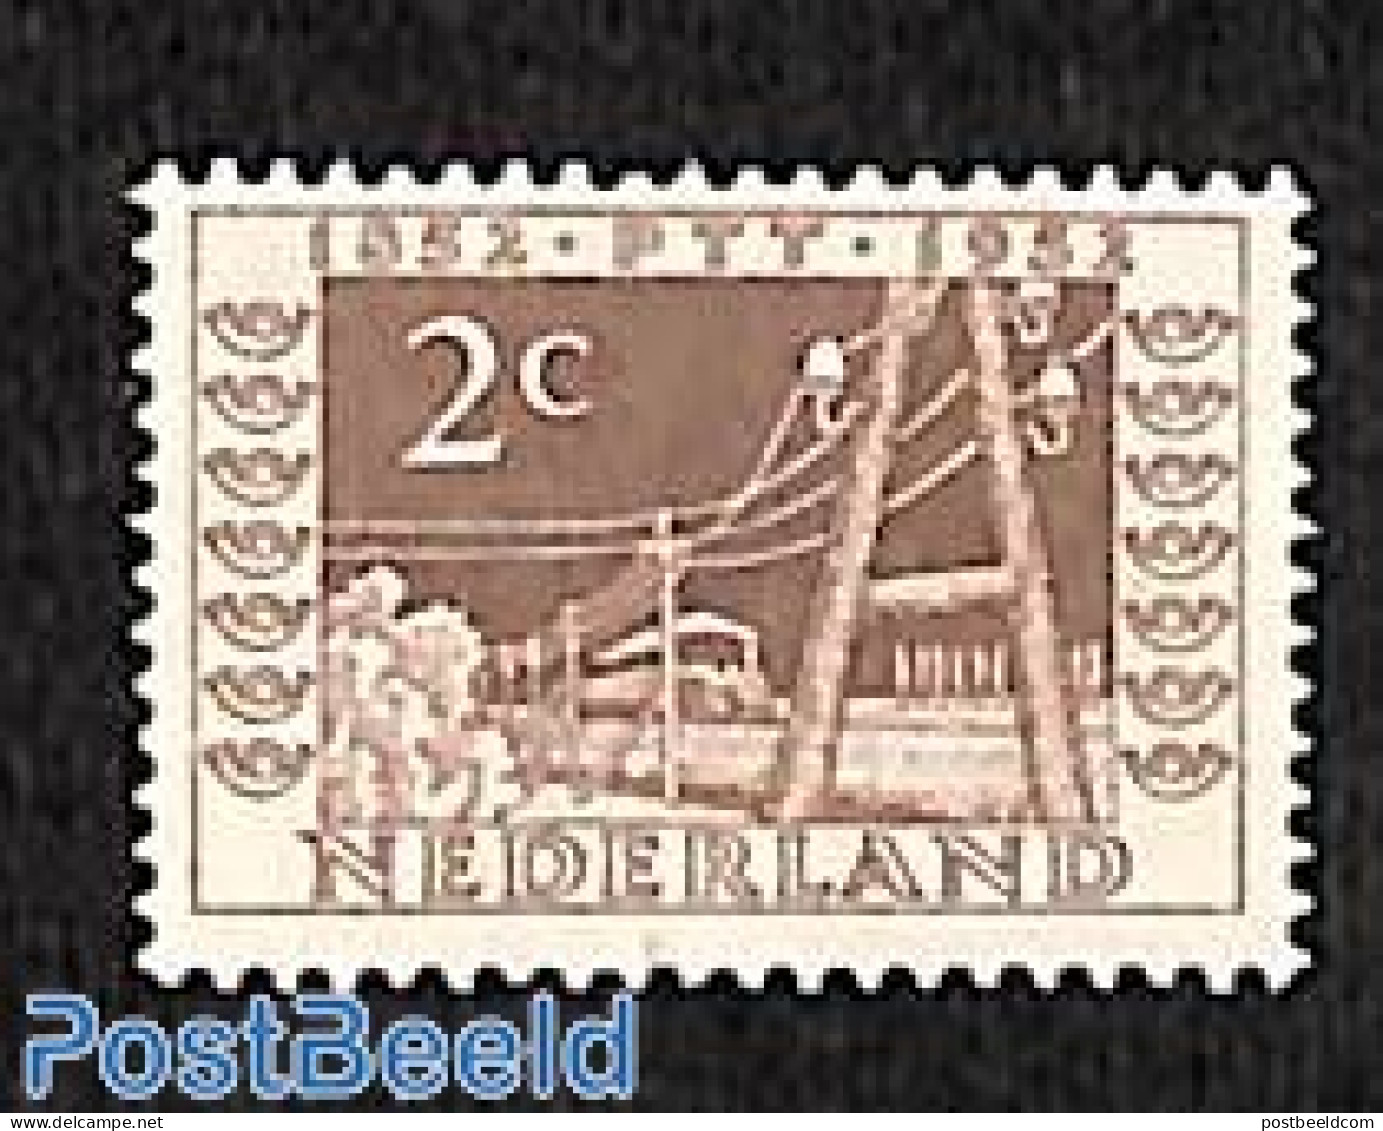 Netherlands 1952 2c Train Around 1852, Mint NH, Transport - Railways - Unused Stamps